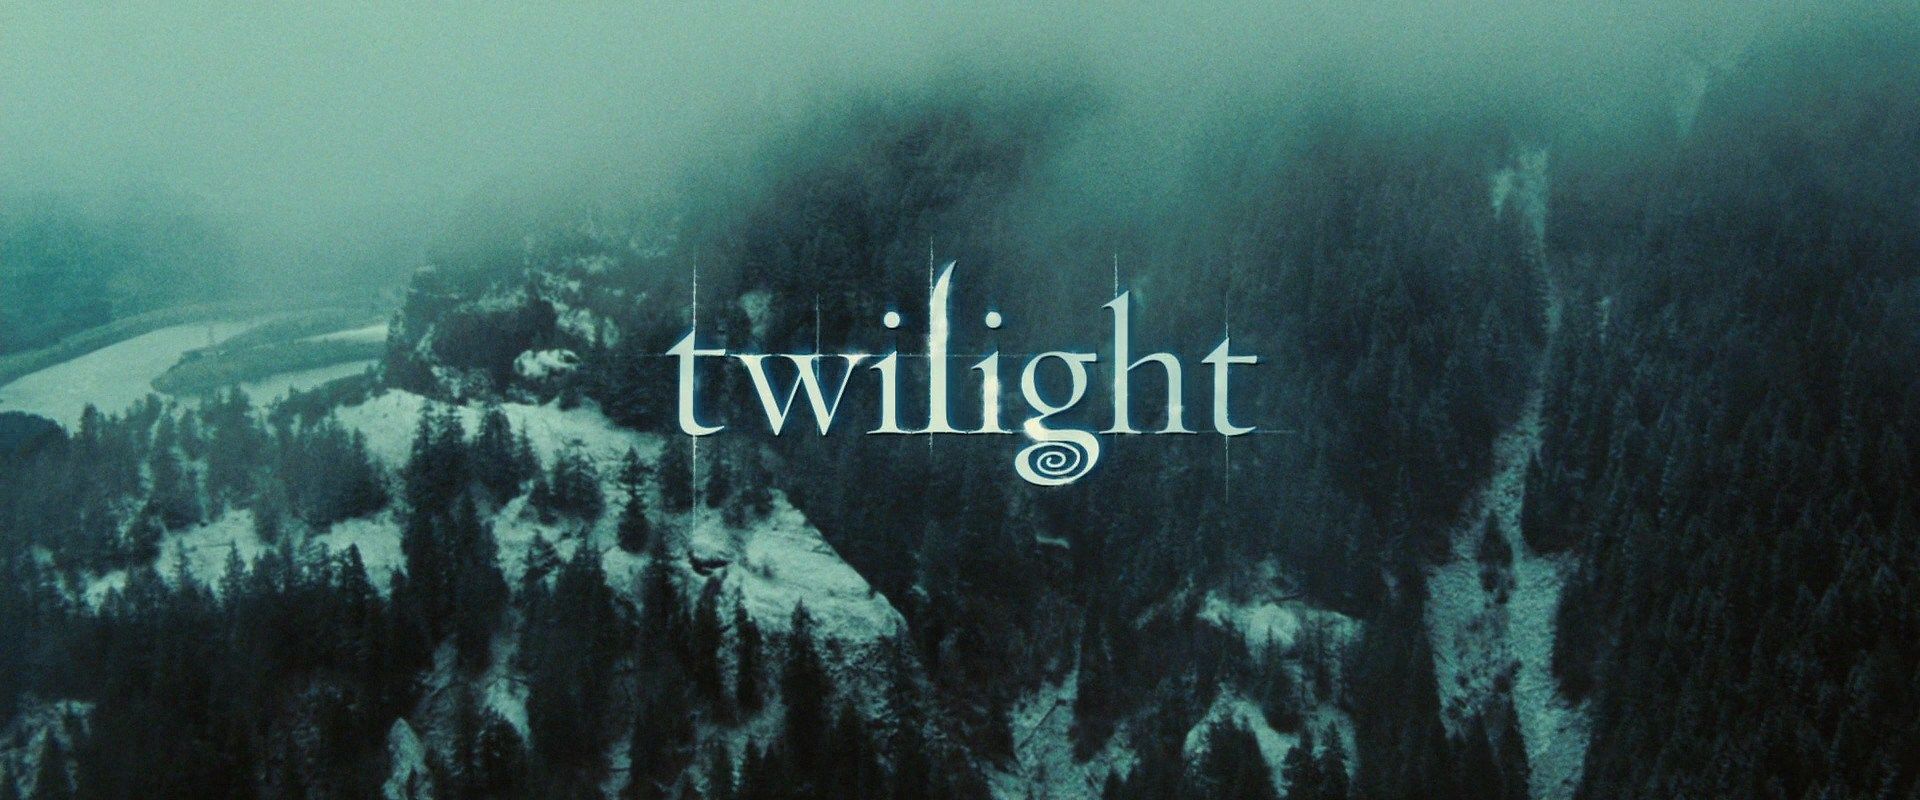 The opening credits of Twilight. - Twilight